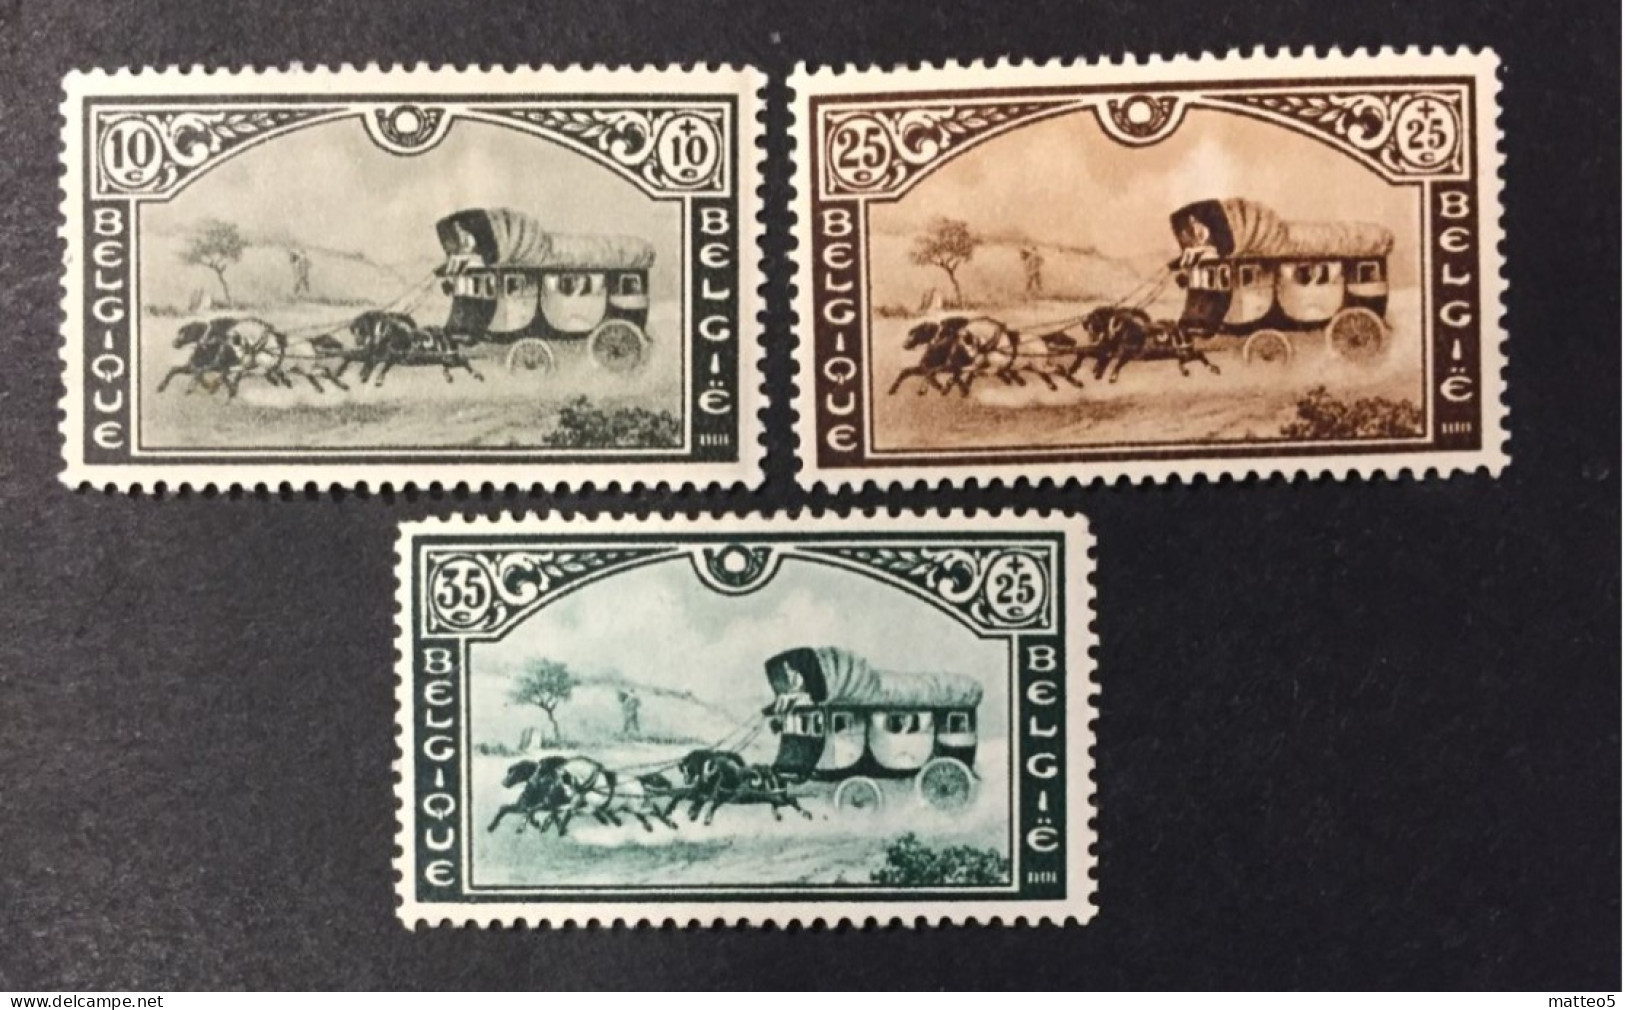 1935 - Belgium - Stage Coach, Postal Service - International Stamp Exhibition Of Belgium And Belgian Congo - Unused - Nuevos